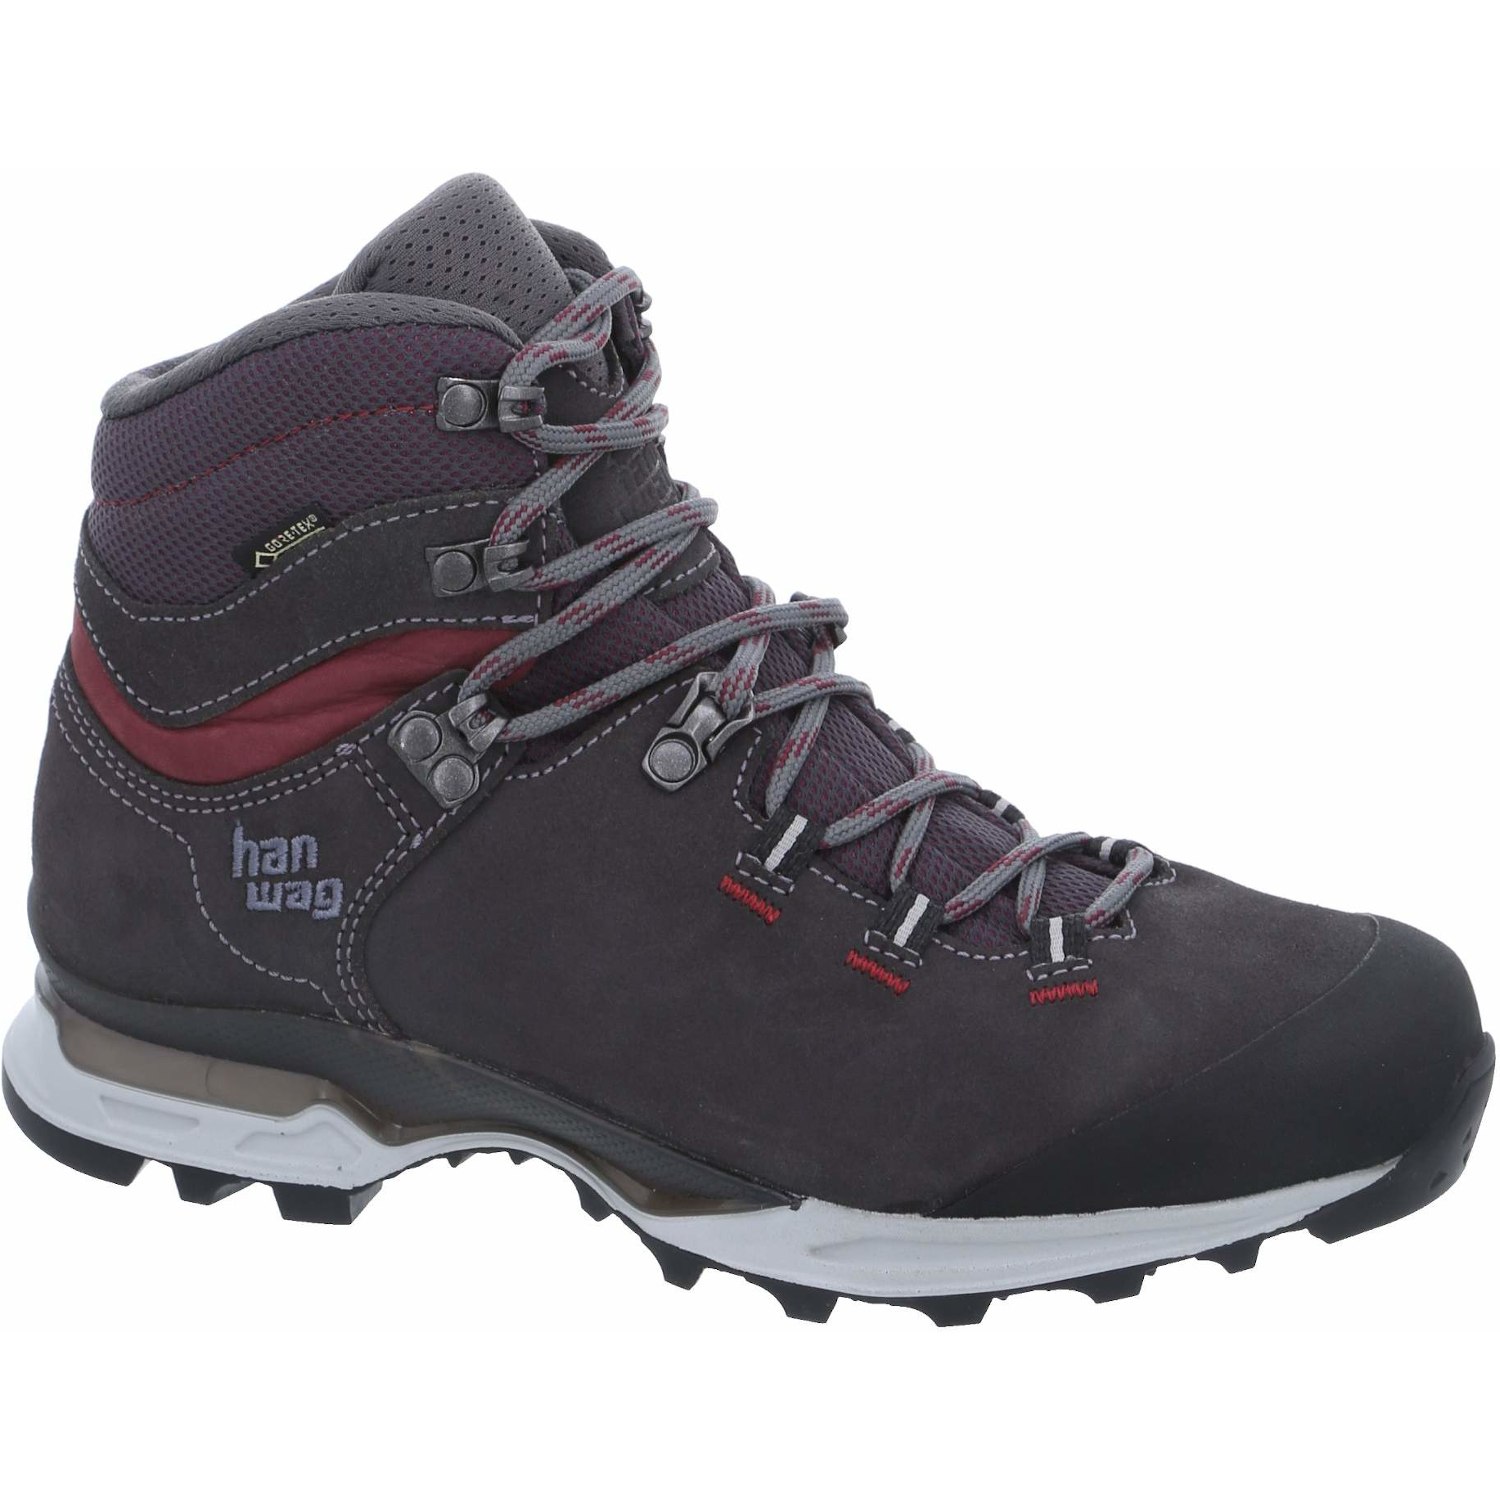 Picture of Hanwag Tatra Light Bunion Lady GTX Hiking Boots - Asphalt/Dark Garnet